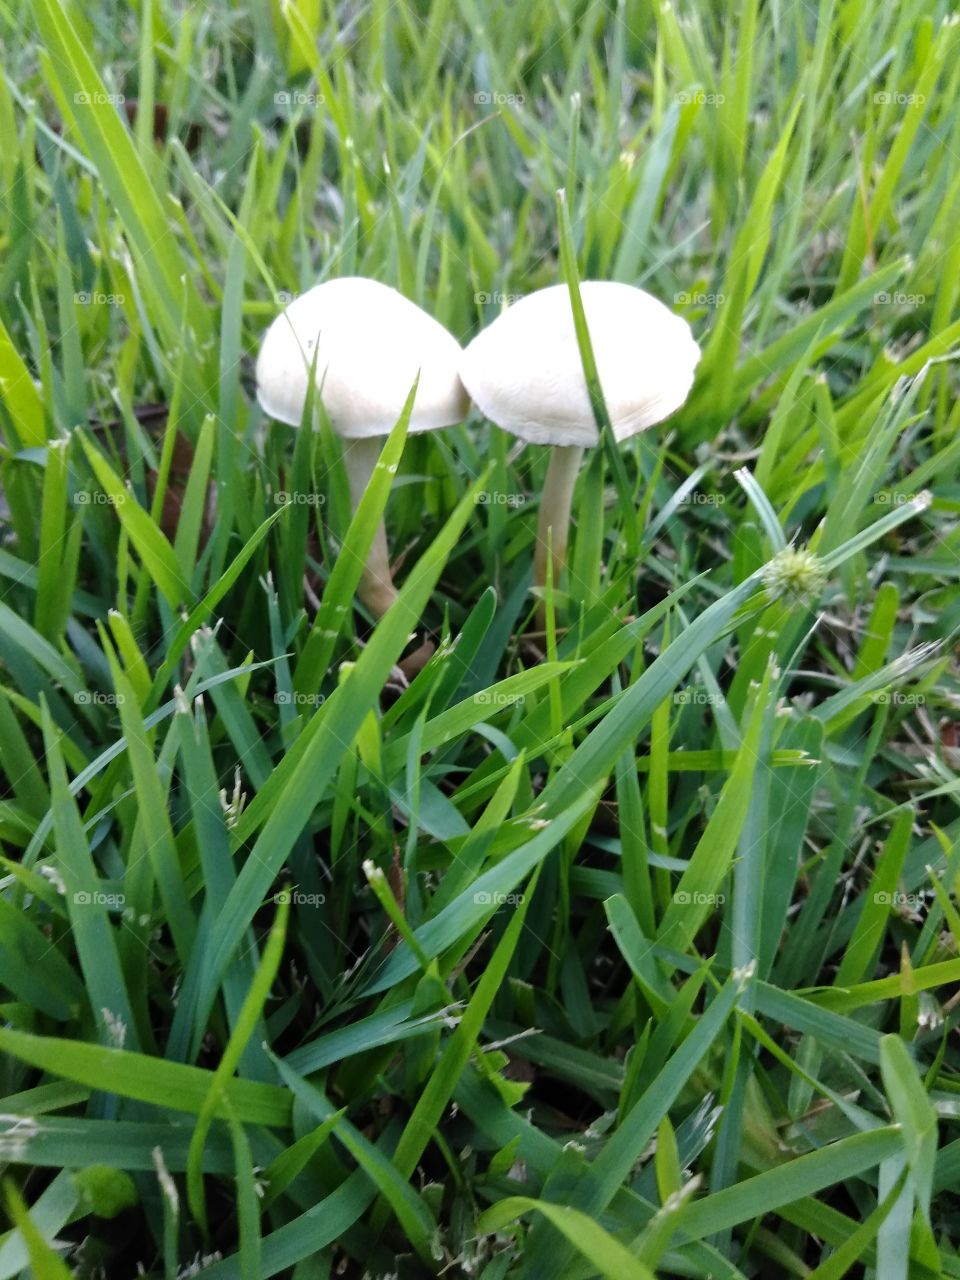 sideview mushrooms